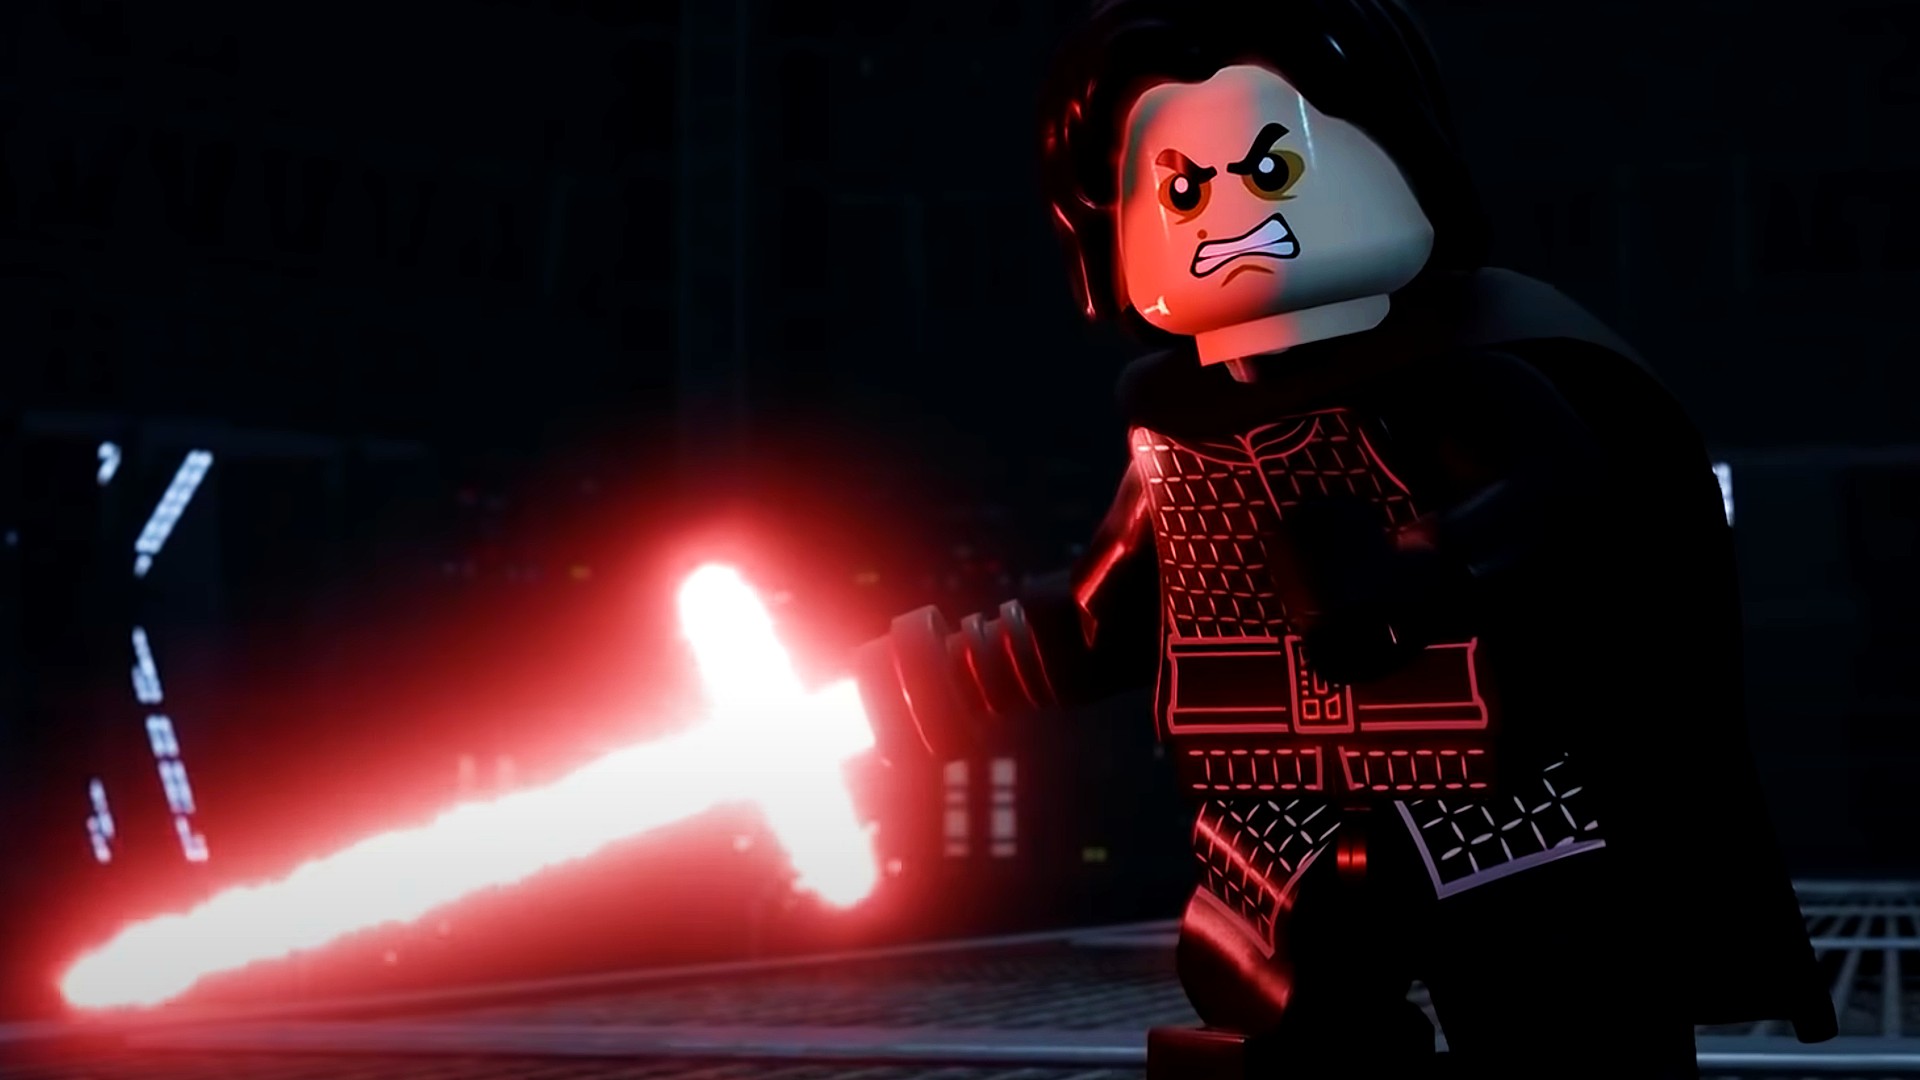 Lego Star Wars: The Skywalker Saga cheats and codes